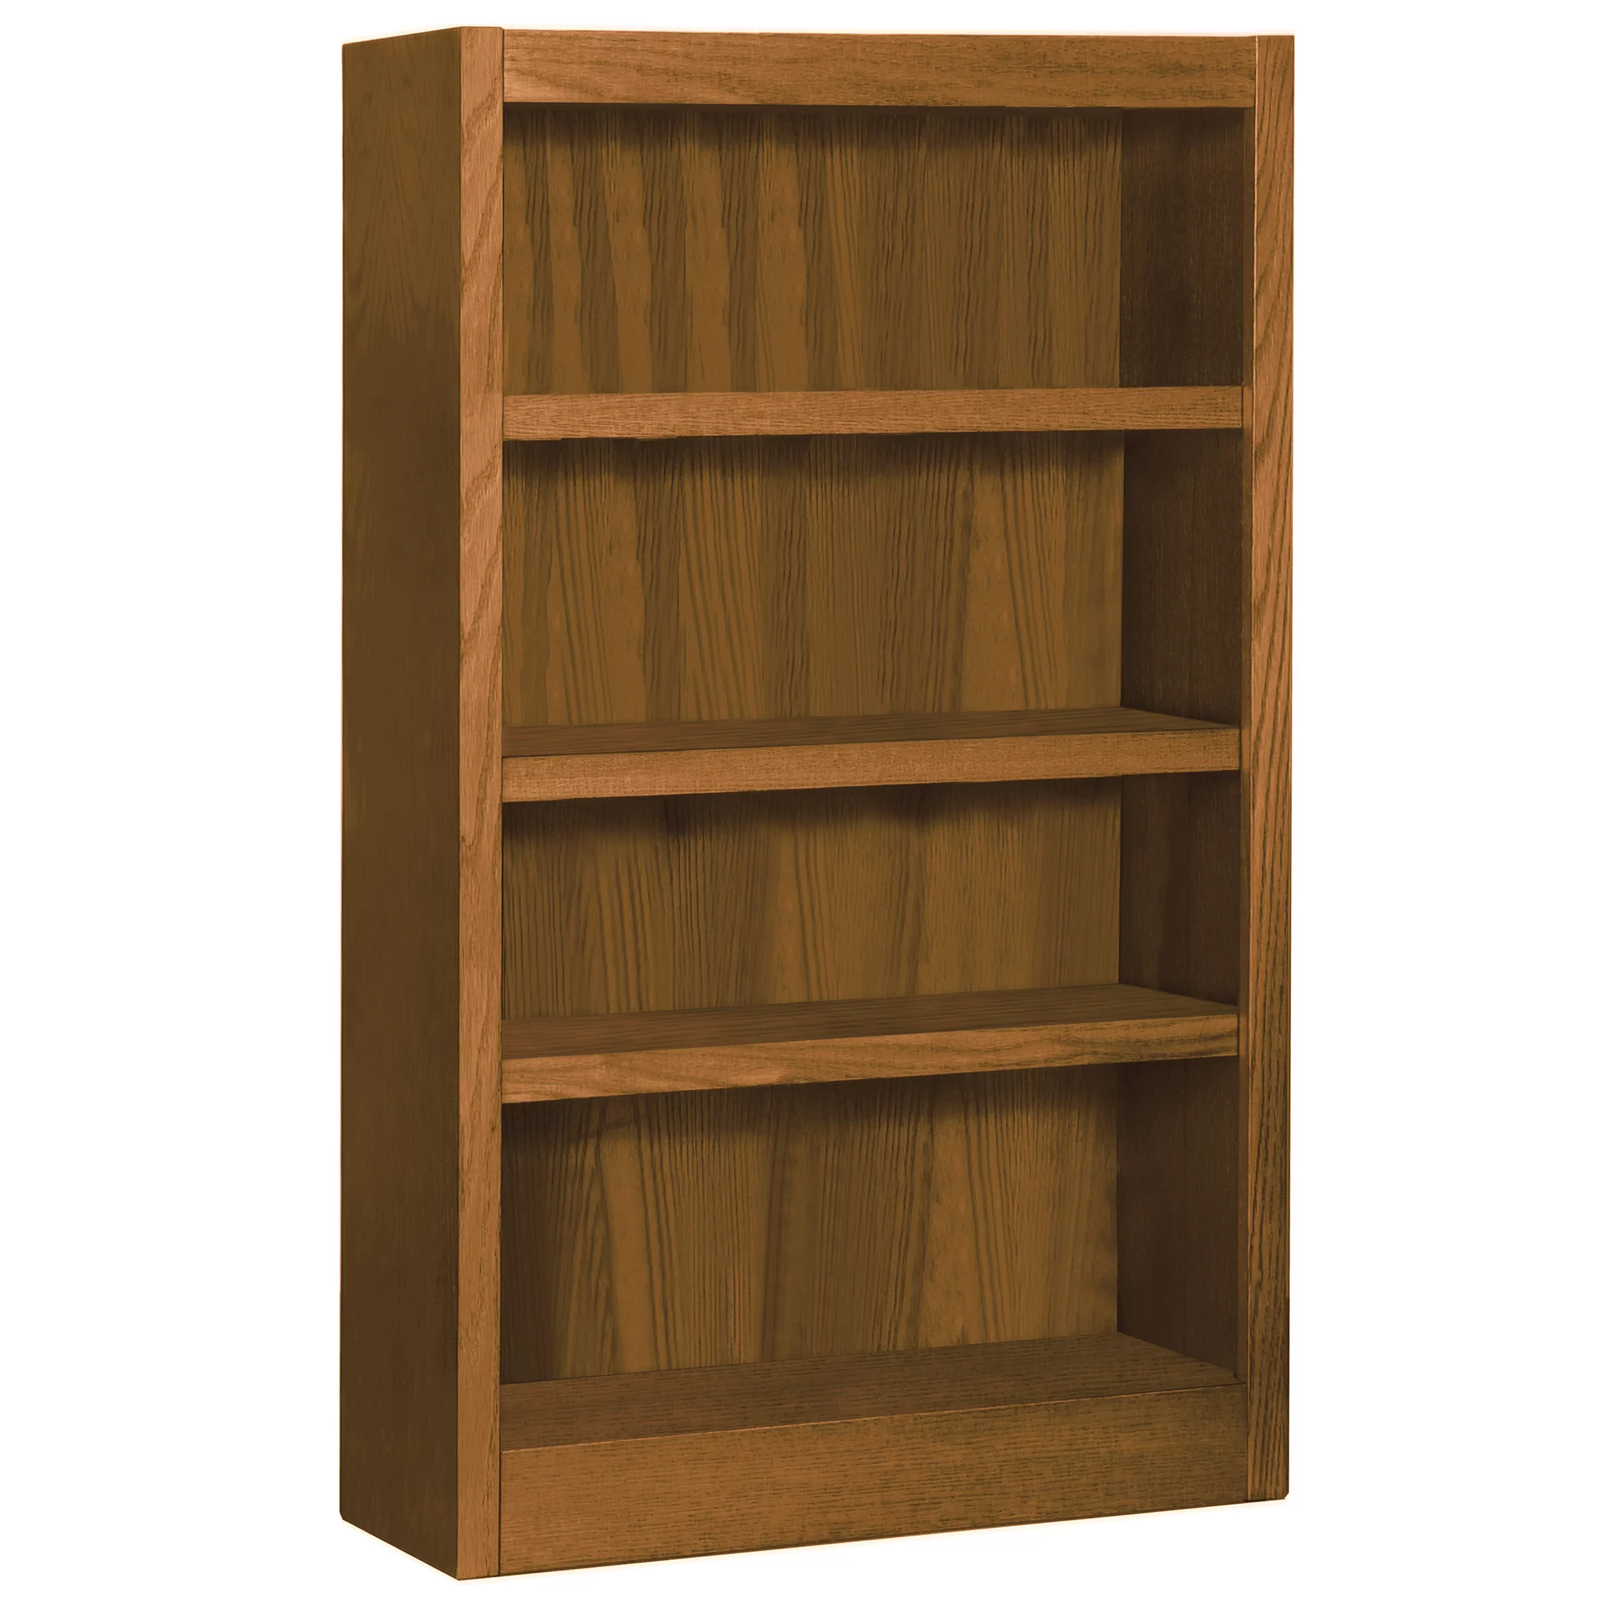 Concepts In Wood 30.5" 4 Shelf Single Wide Bookcase - Dry Oak Finish